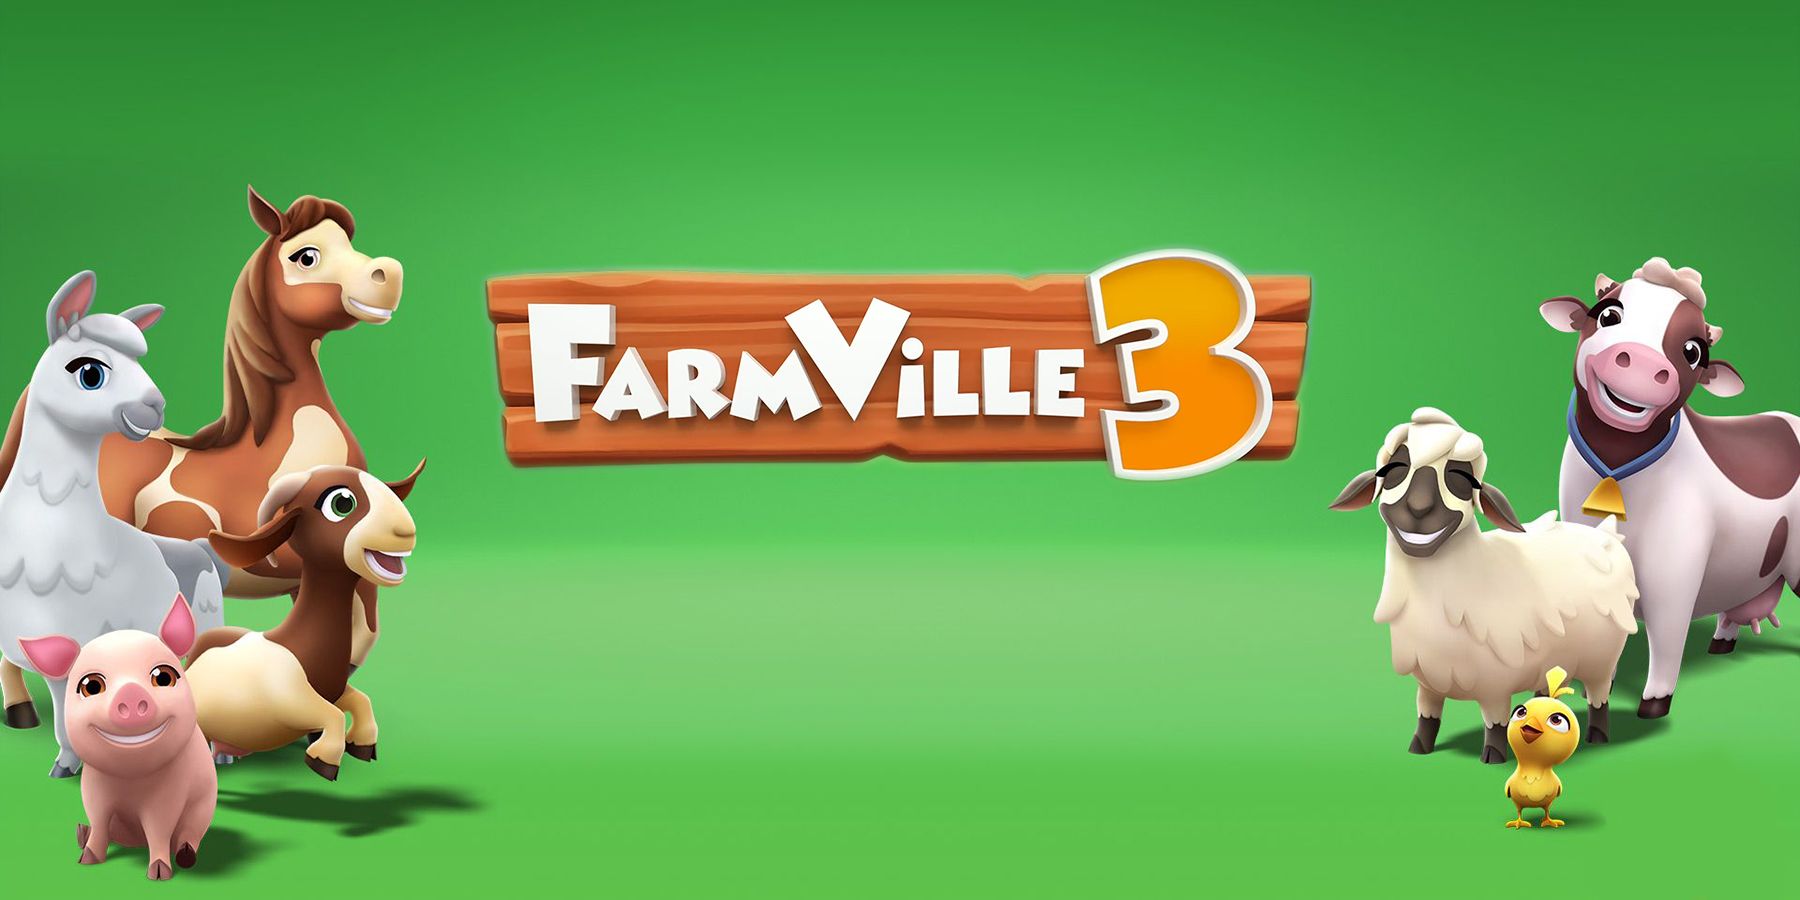 farmville 3 pearls